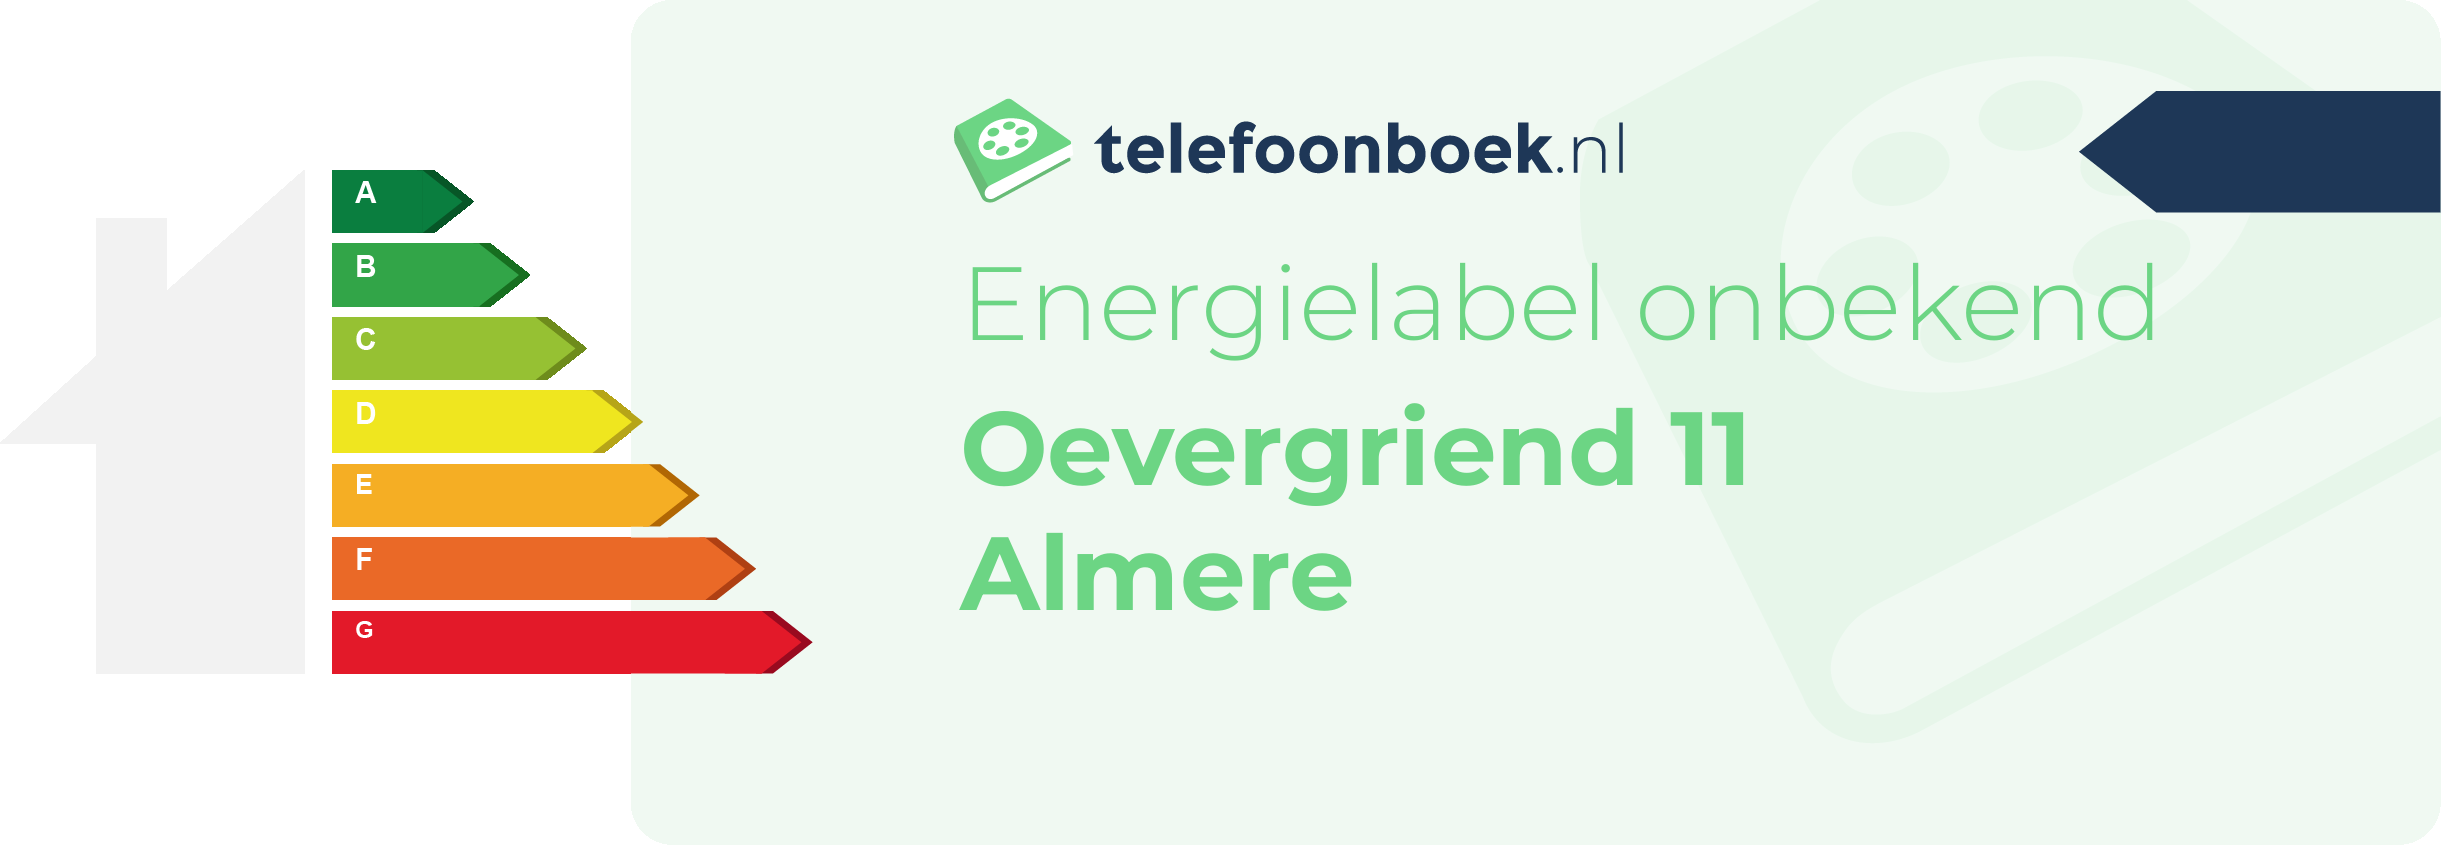 Energielabel Oevergriend 11 Almere